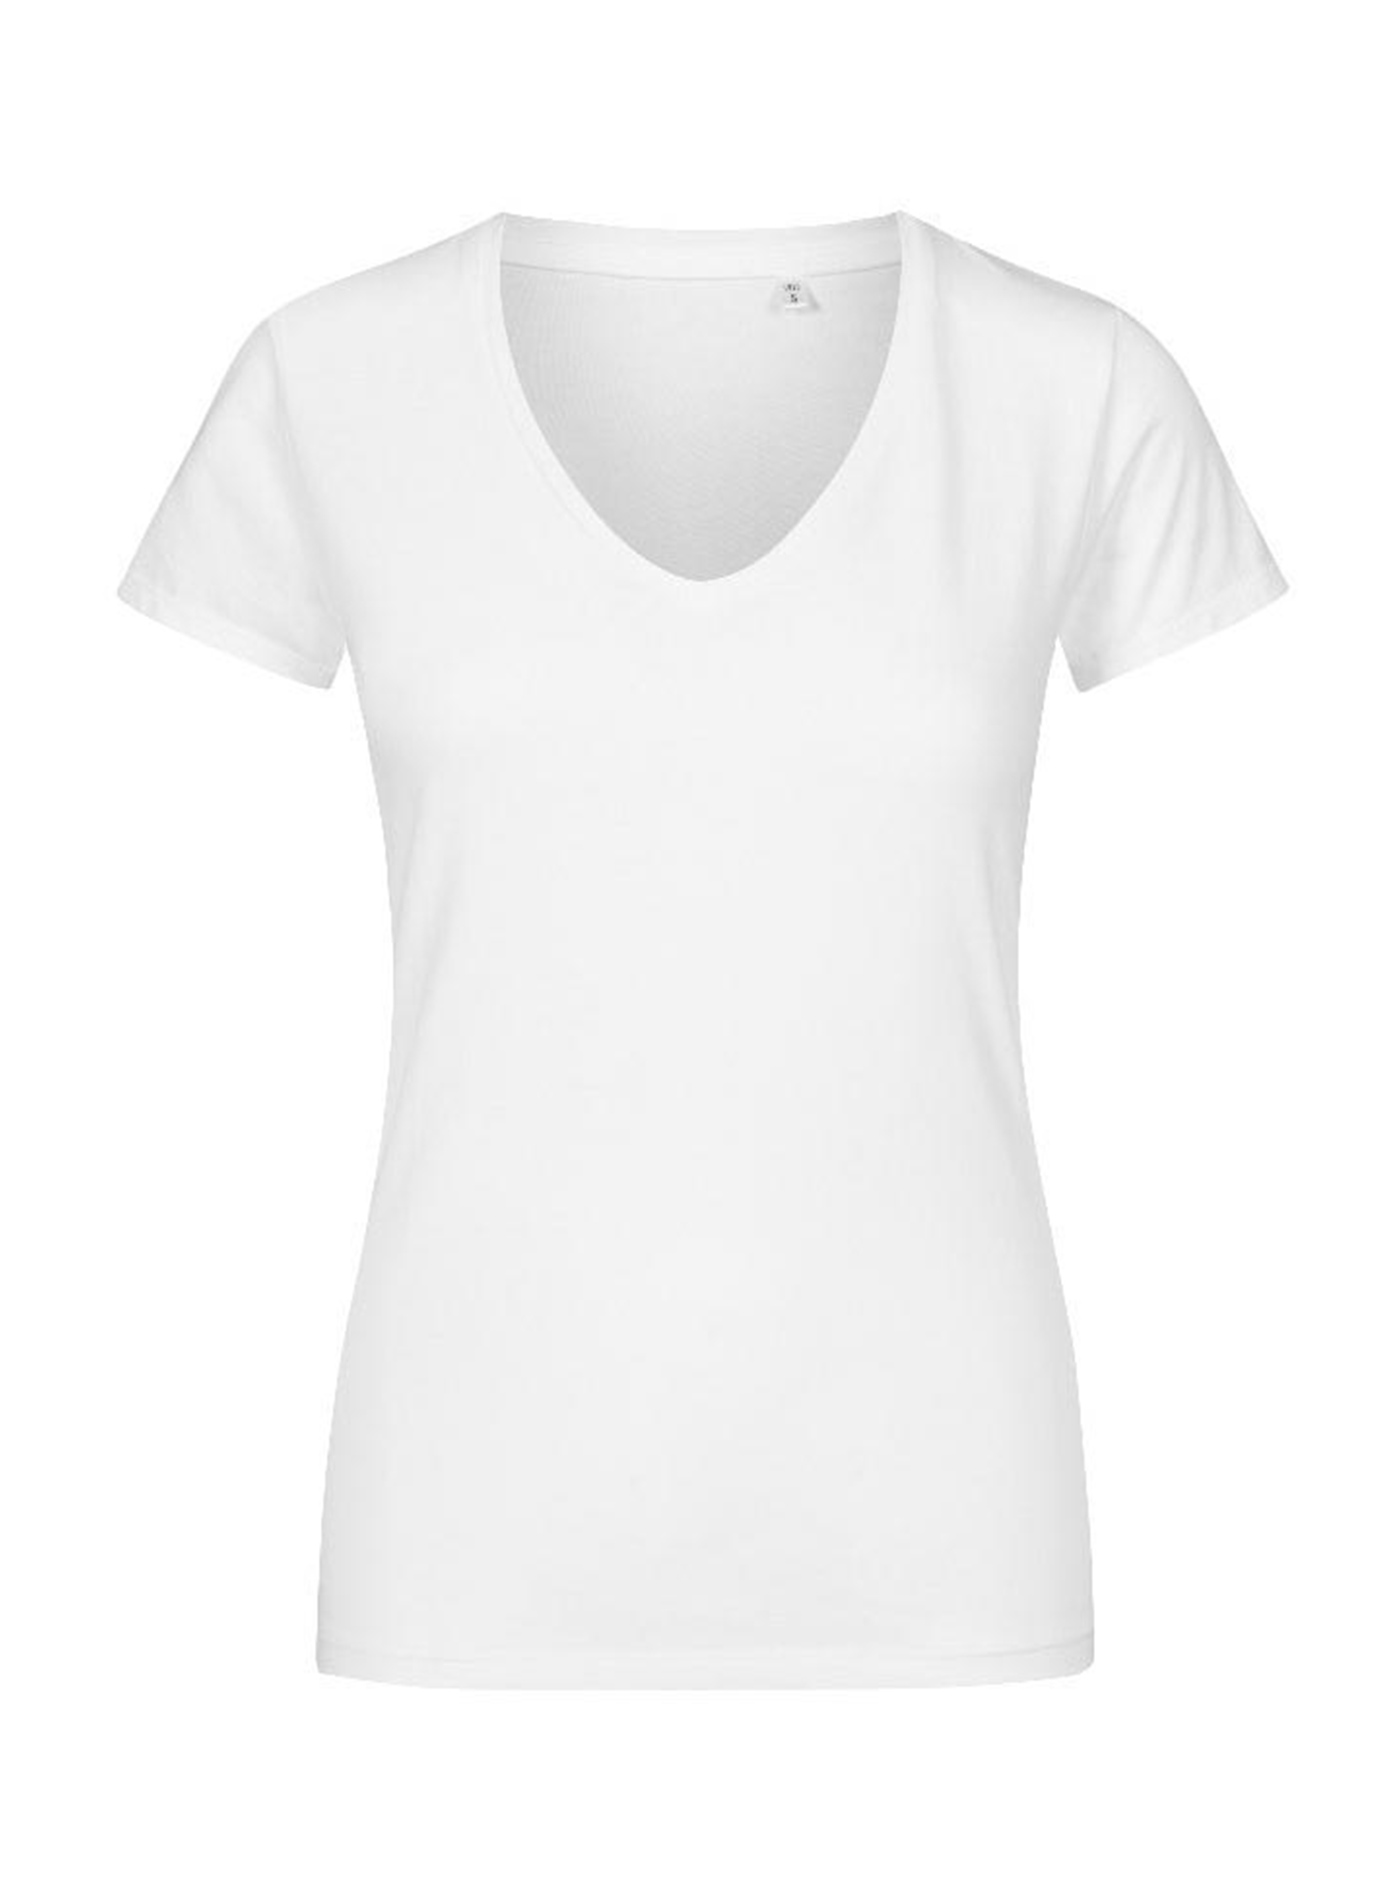 Dámské tričko Promodoro - Bílá XL